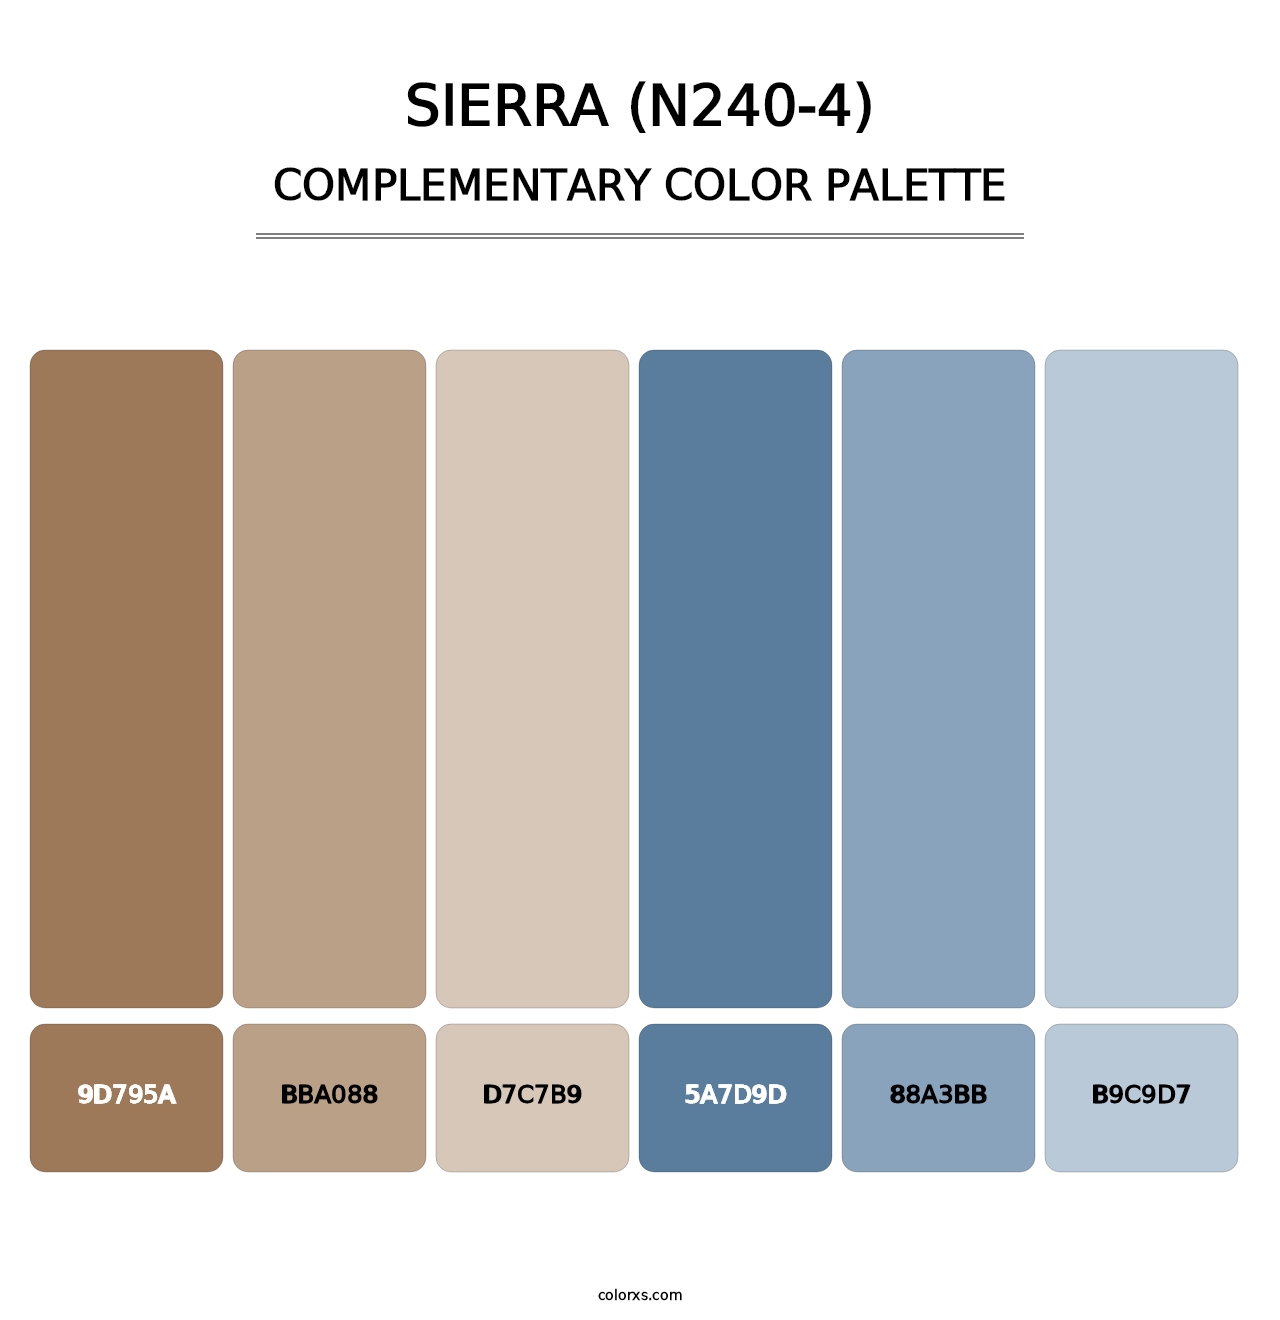 Sierra (N240-4) - Complementary Color Palette